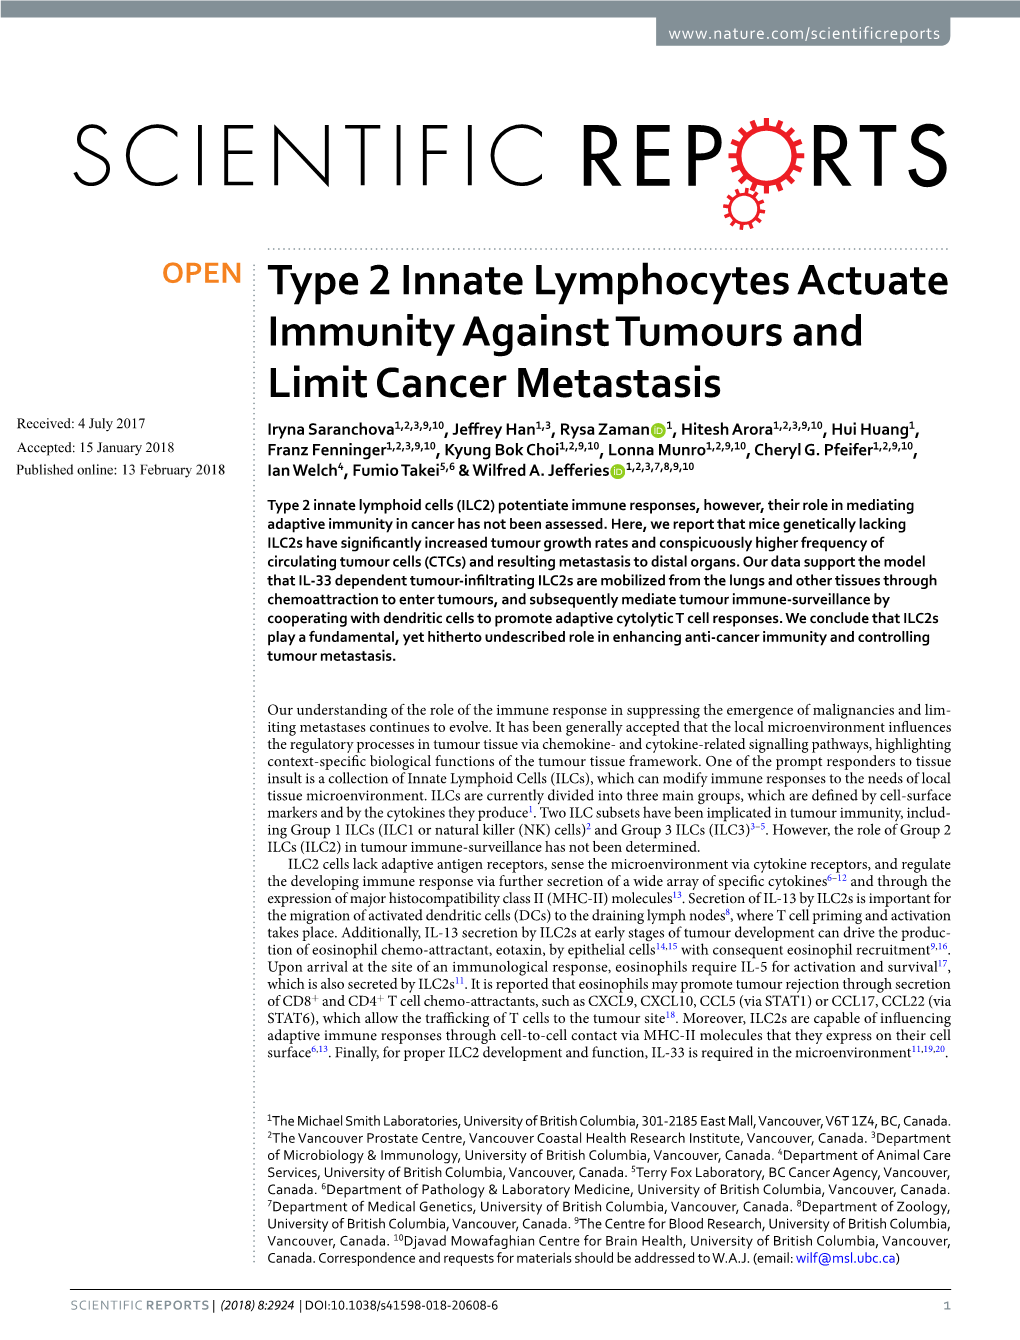 Type 2 Innate Lymphocytes Actuate Immunity Against Tumours And